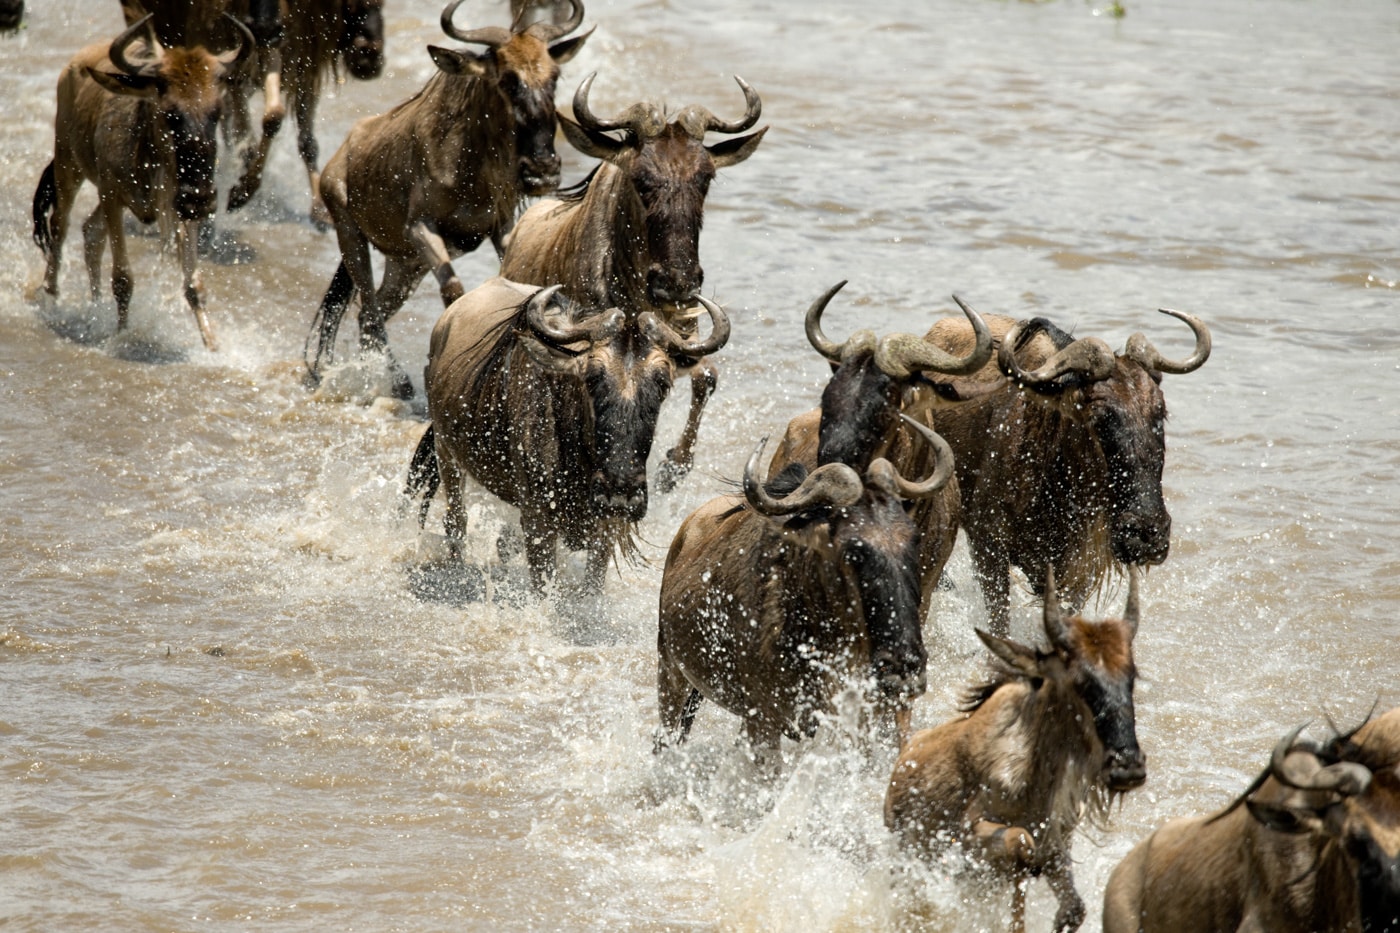 Wildebeest Running In River In The Serengeti, Tanzania, Africa